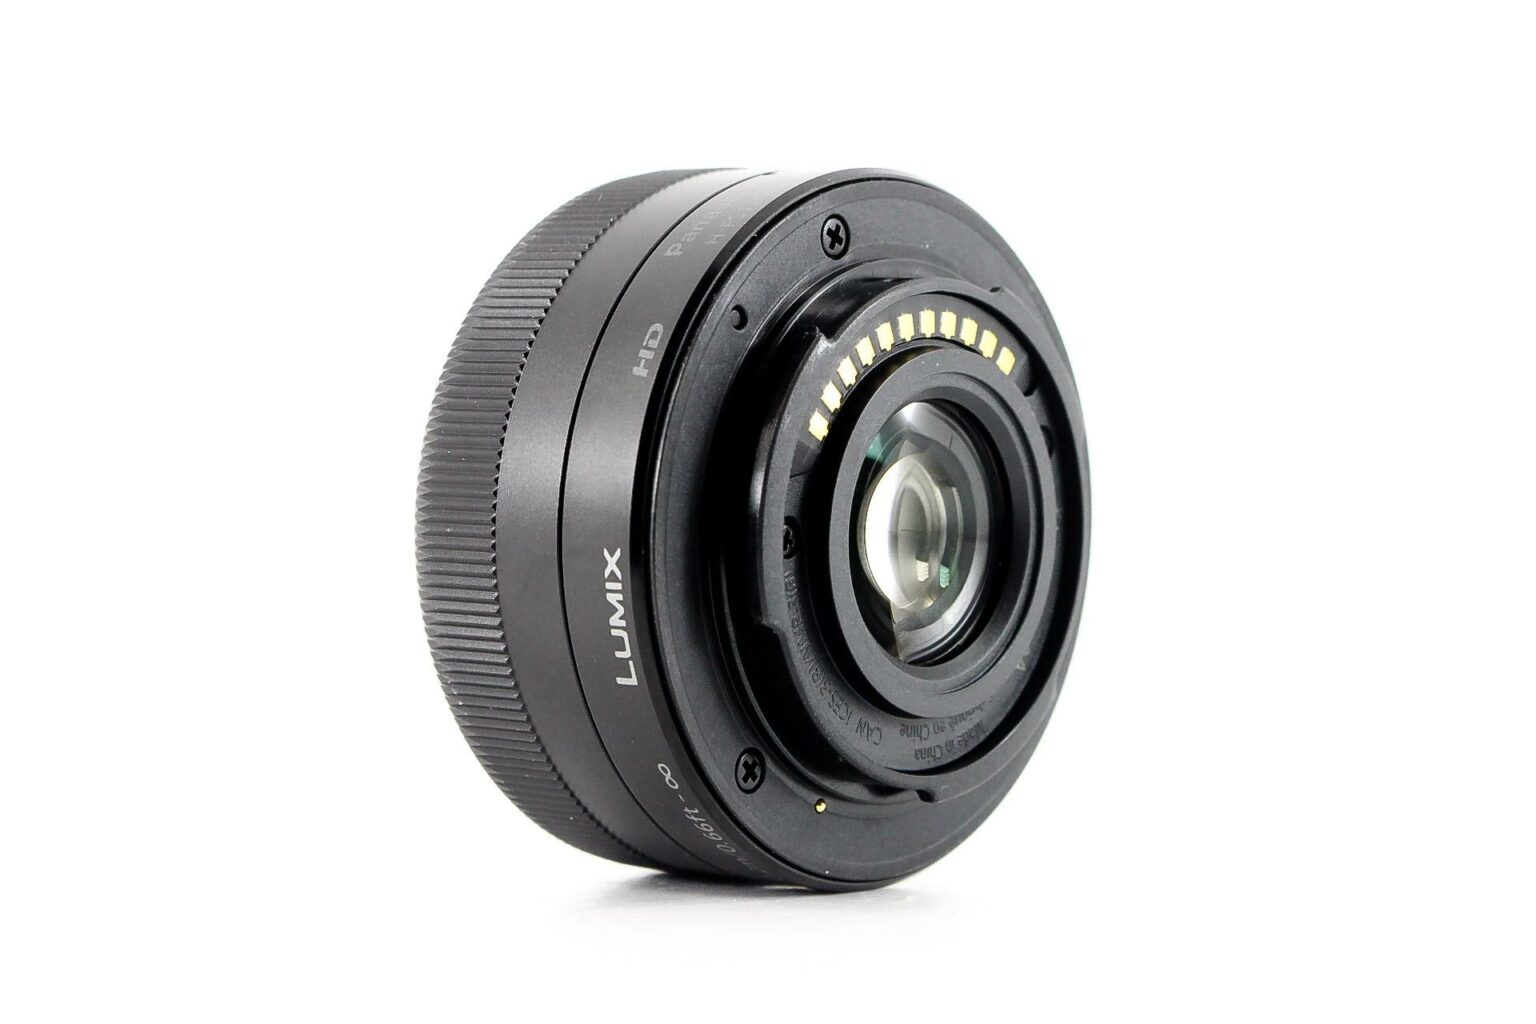 Panasonic Lumix G Vario 12-32mm f3.5-5.6 ASPH Lens - Lenses and Cameras